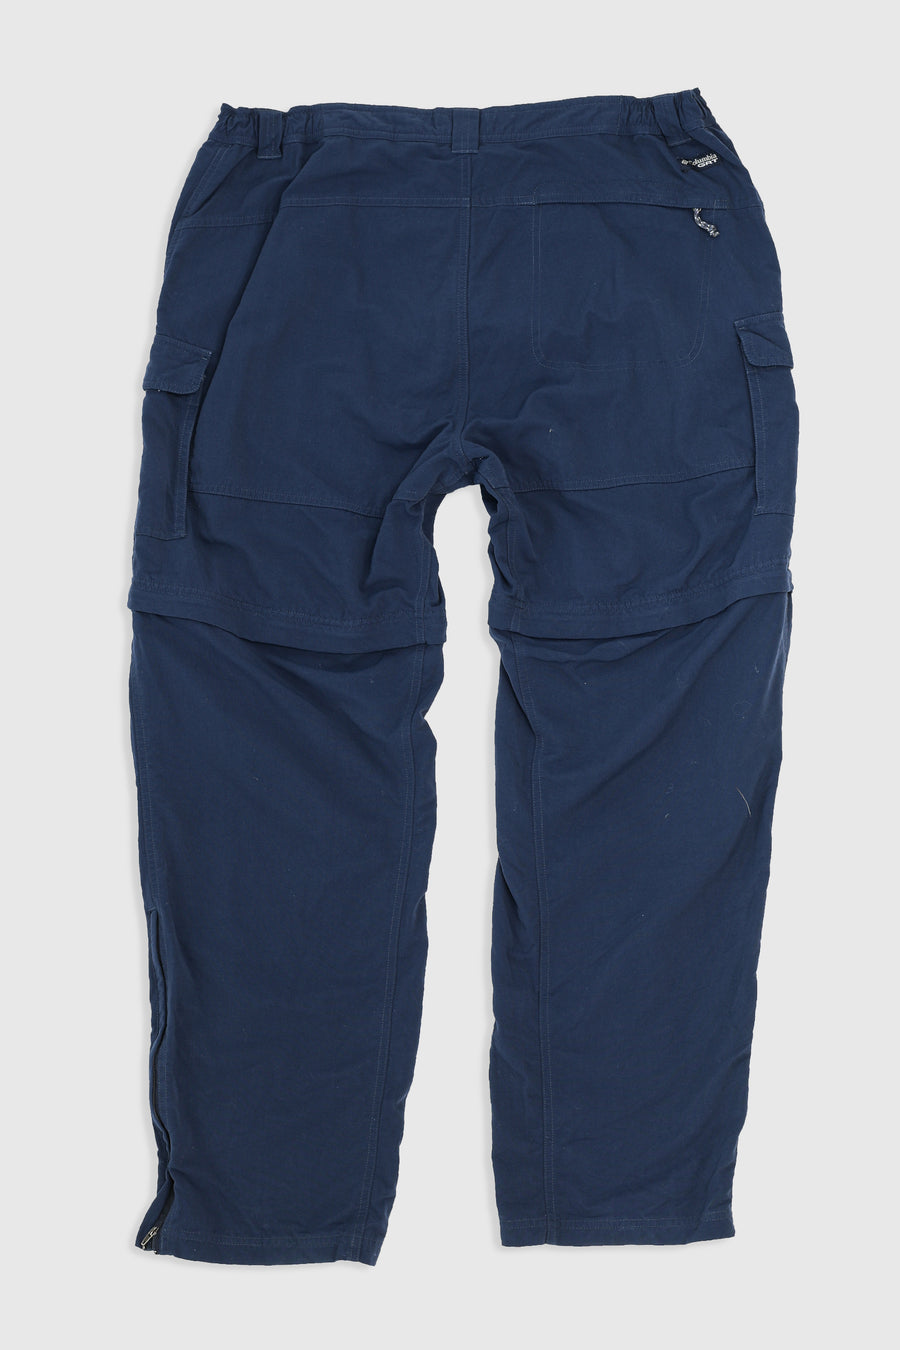 Vintage Columbia Tactical Hiking Pants - Men's XL